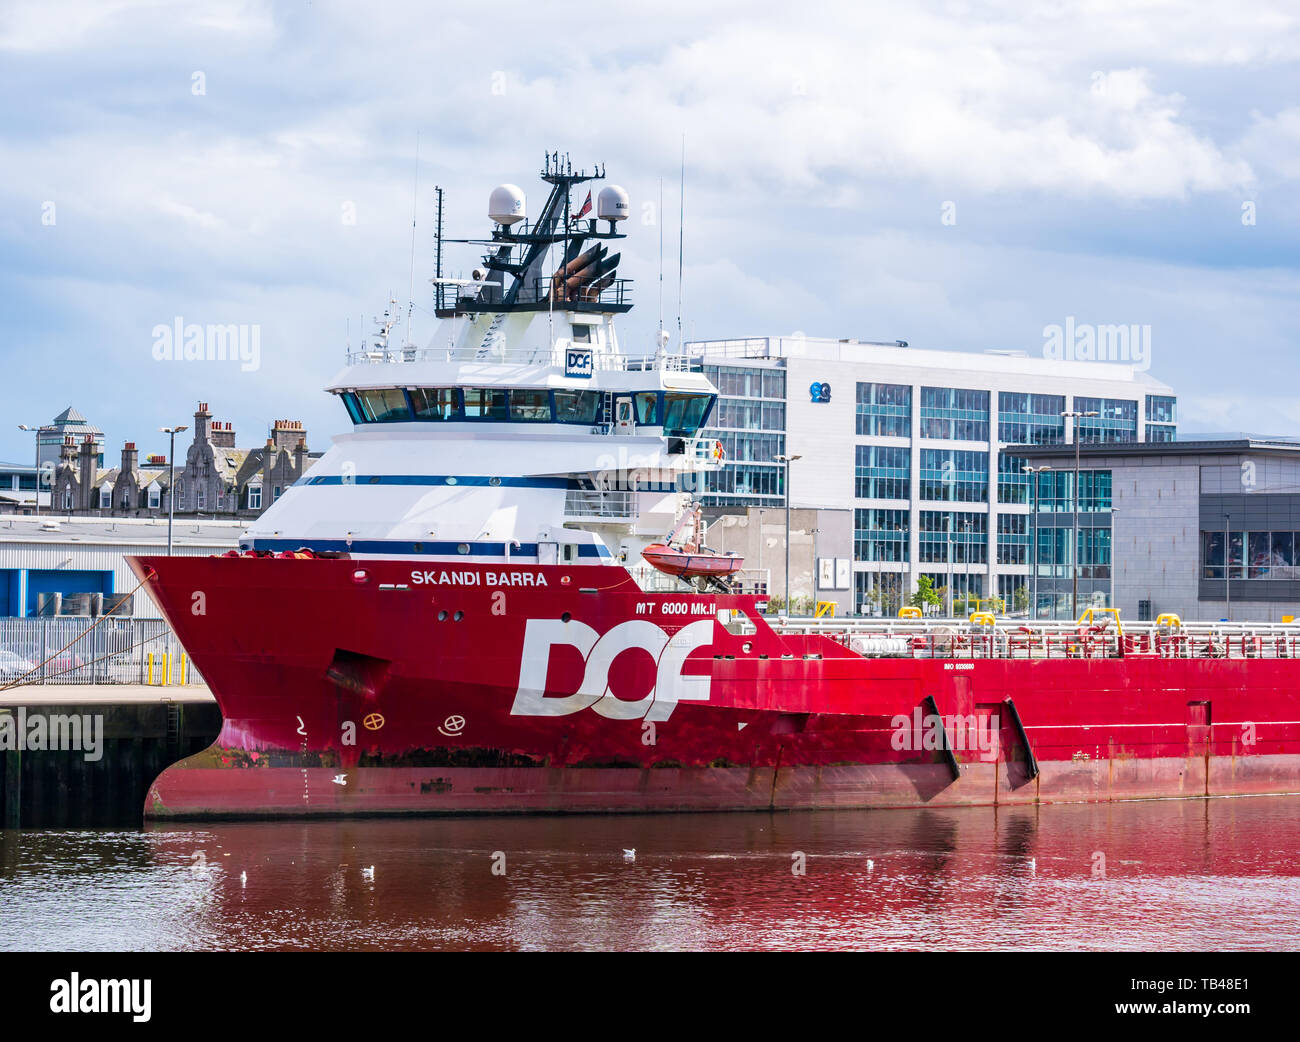 Norwegian DOF Fleet Skandi Barra platform and offshore supply ship docked in Aberdeen harbour, Aberdeen, Scotland, UK Stock Photo